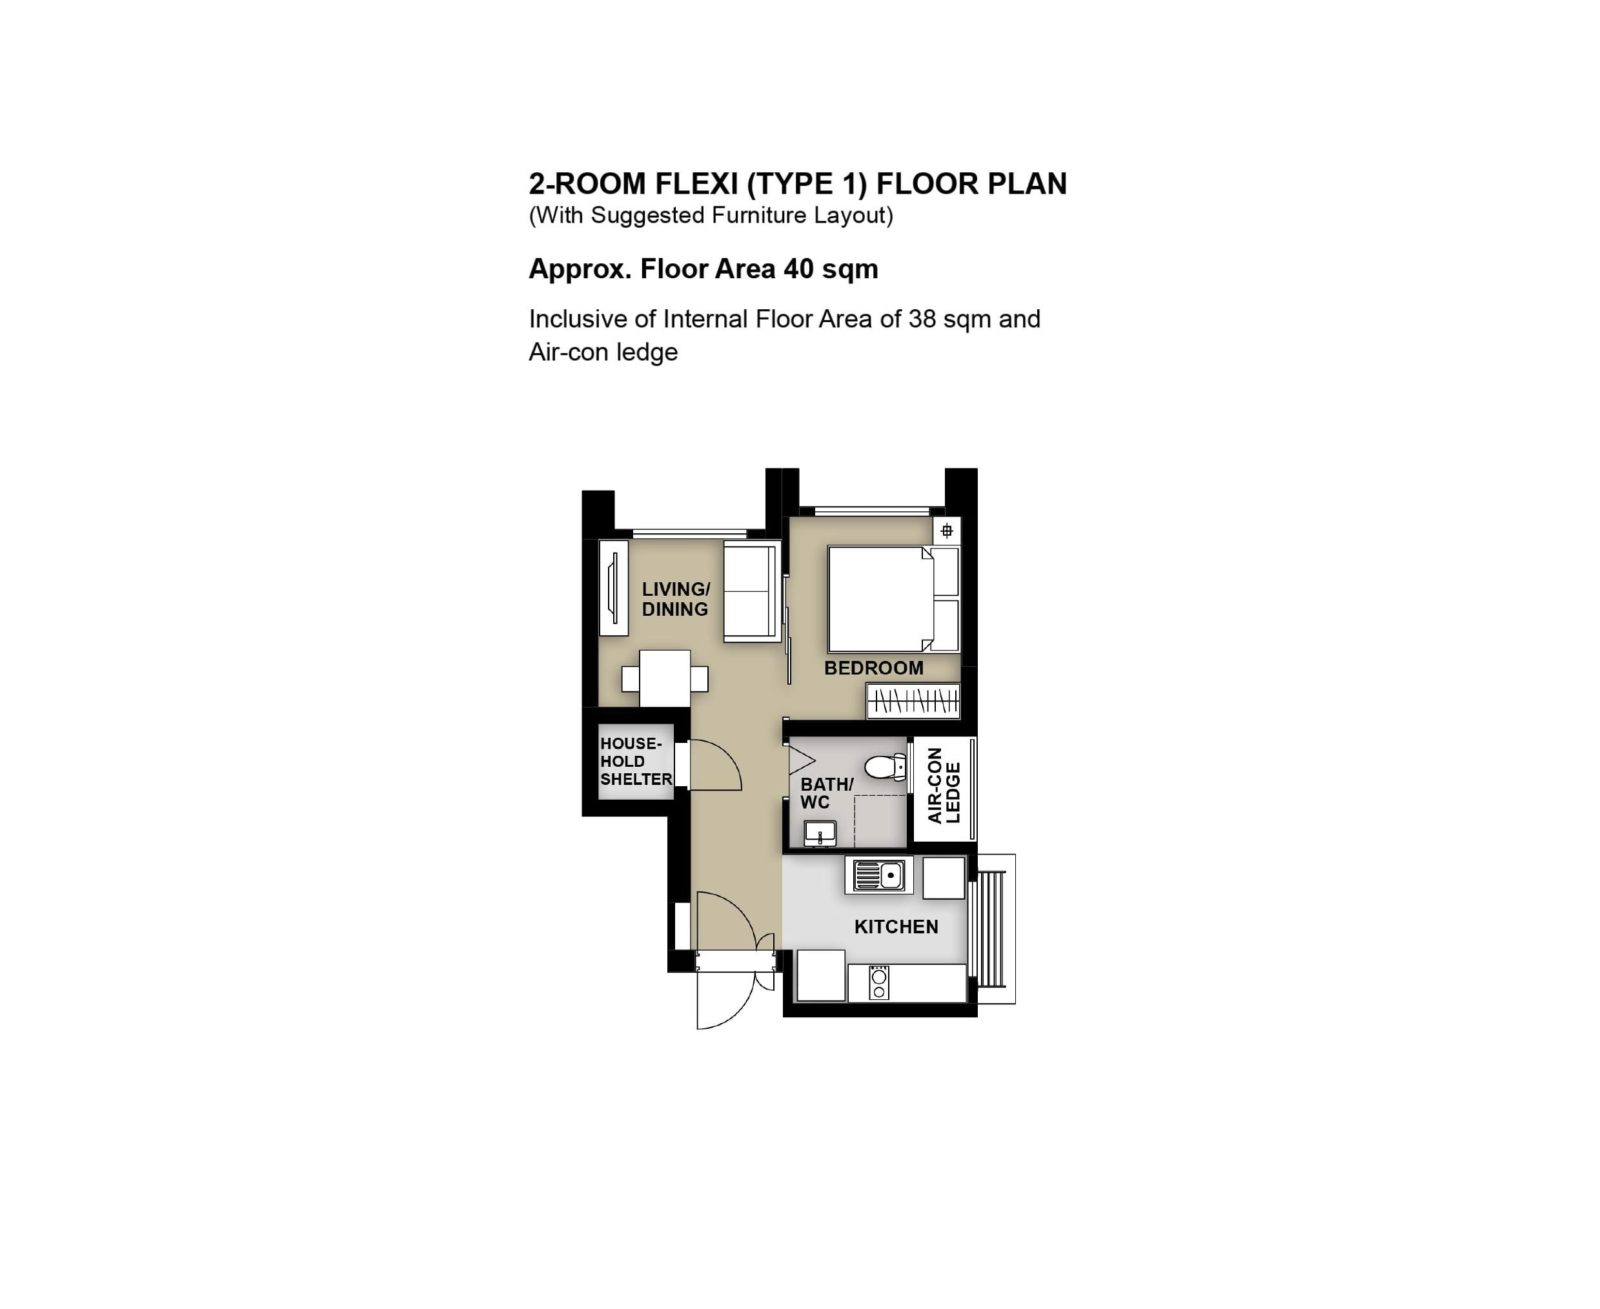 Keat Hong Grange 2 Room Flexi Type 1 Floor Plan